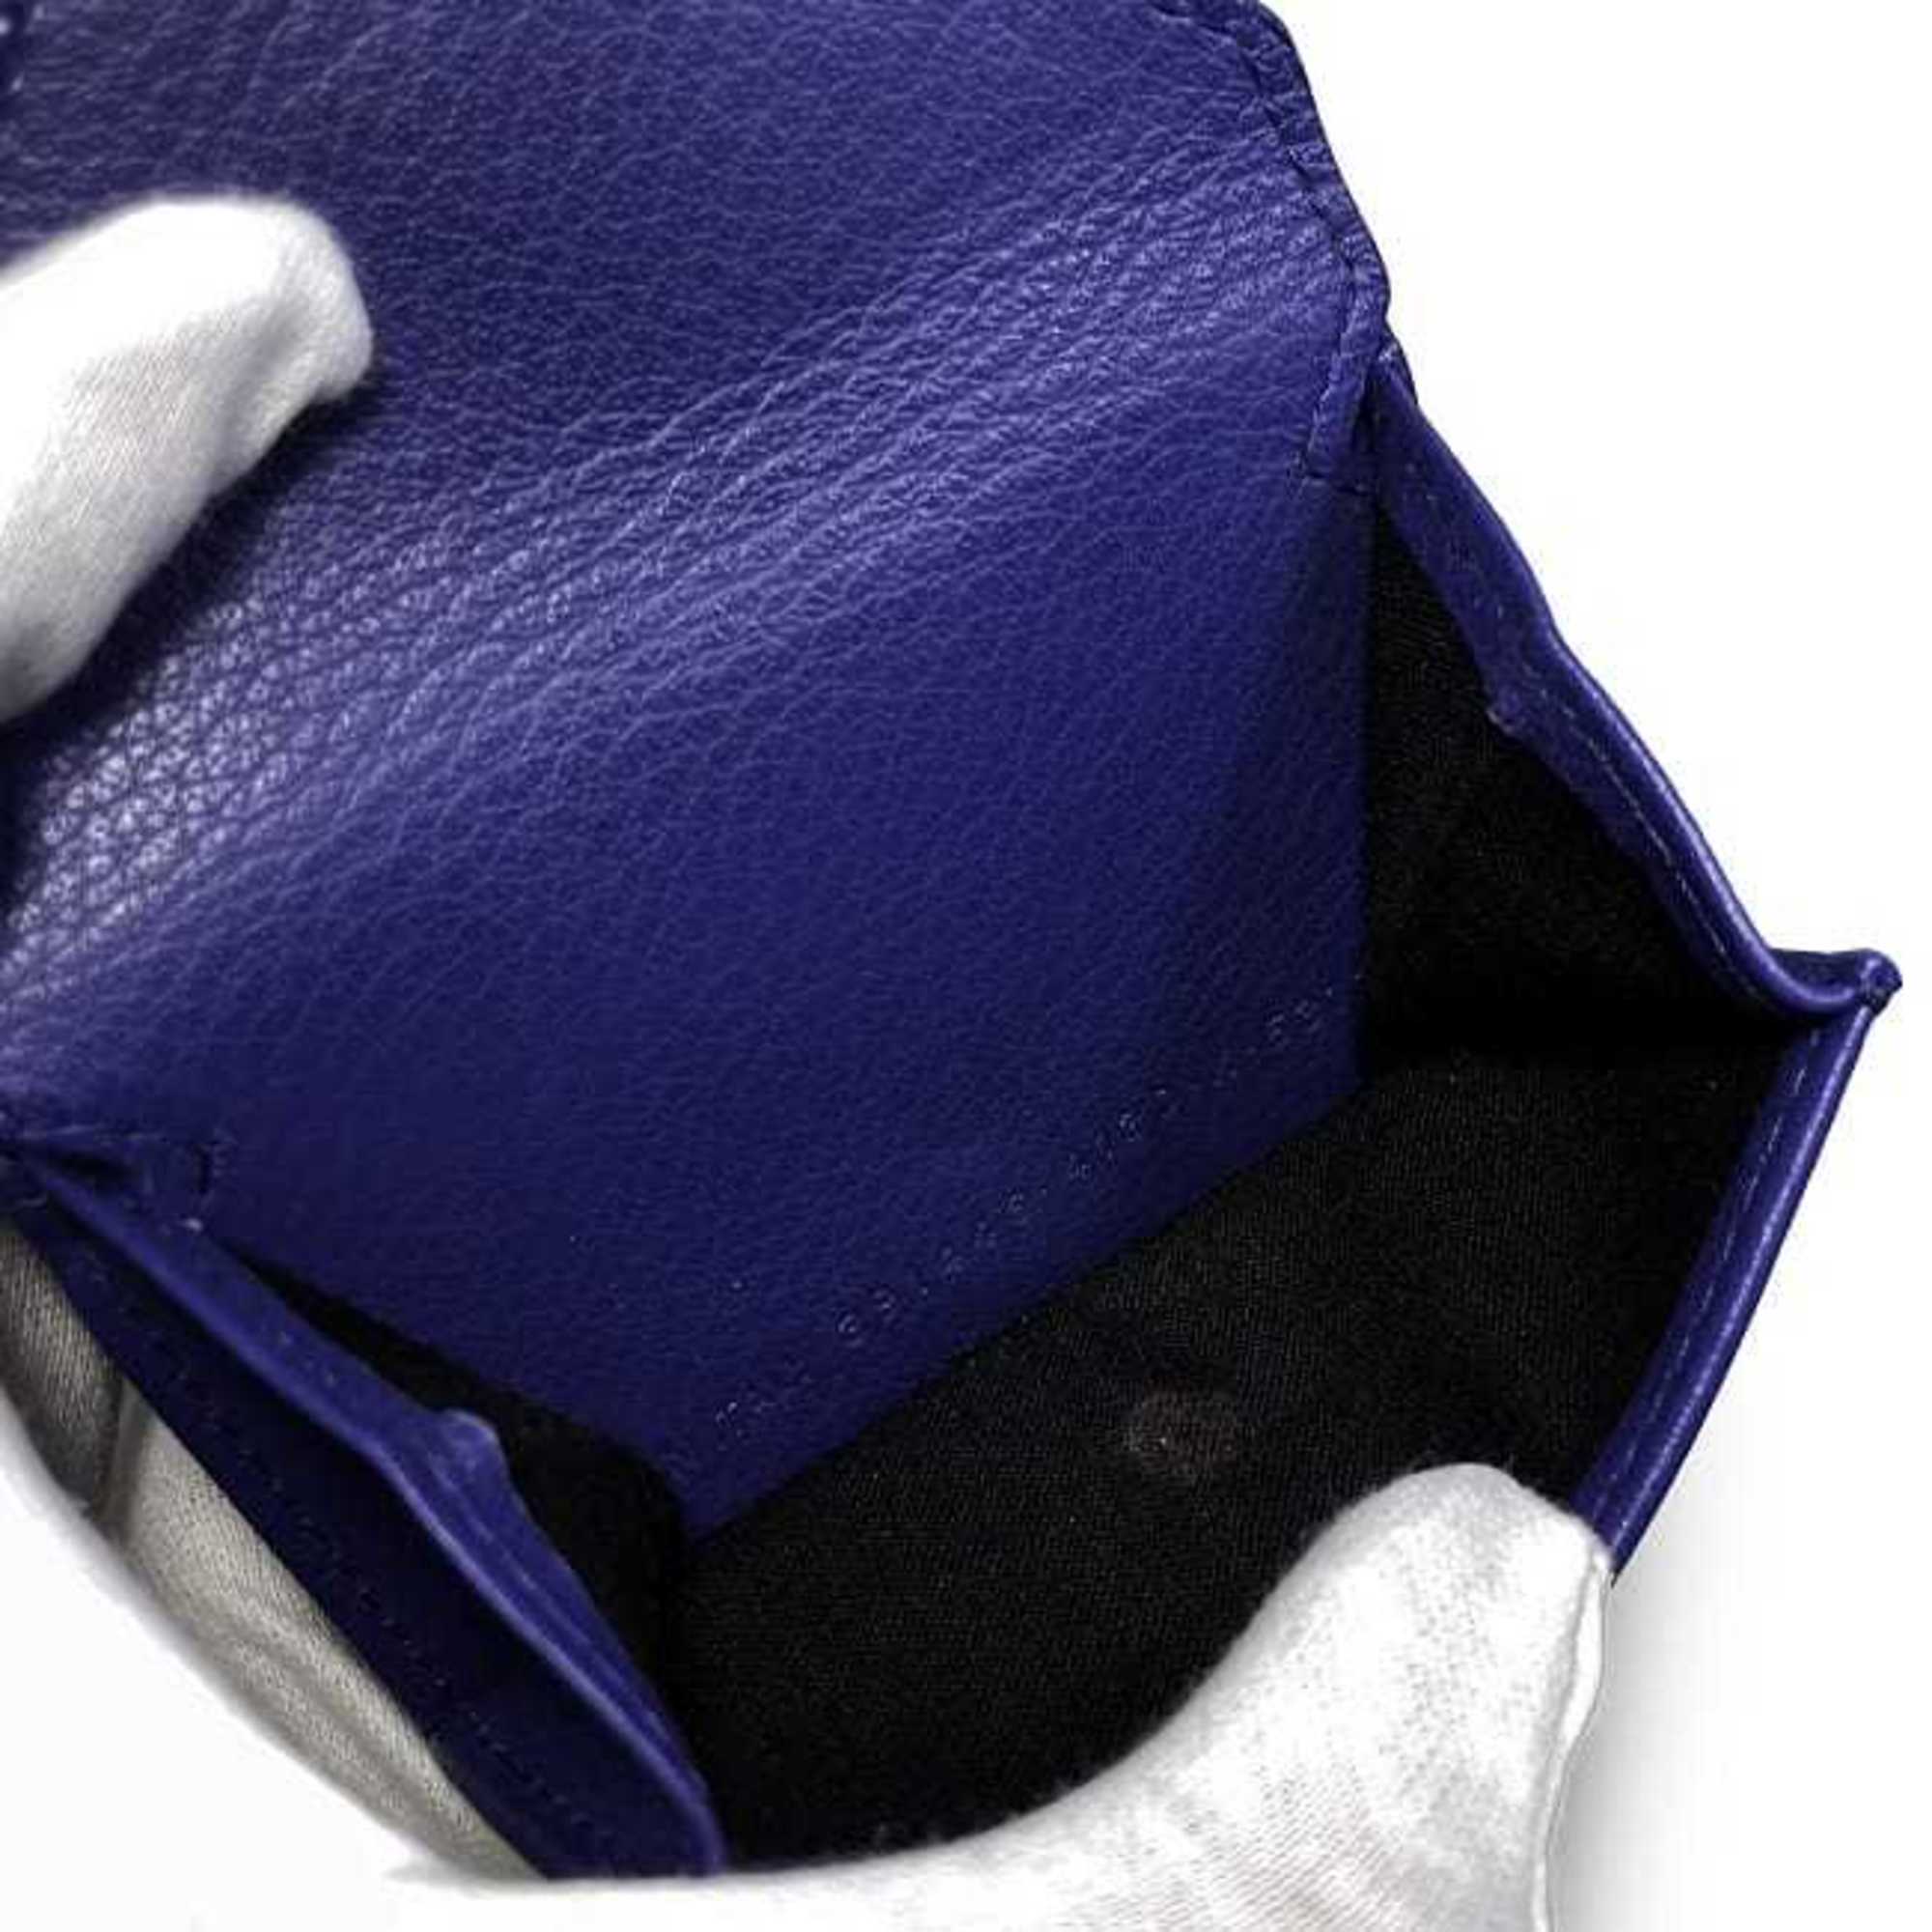 Balenciaga tri-fold wallet paper blue 391446 DLQ0N 4130 leather BALENCIAGA size men's women's